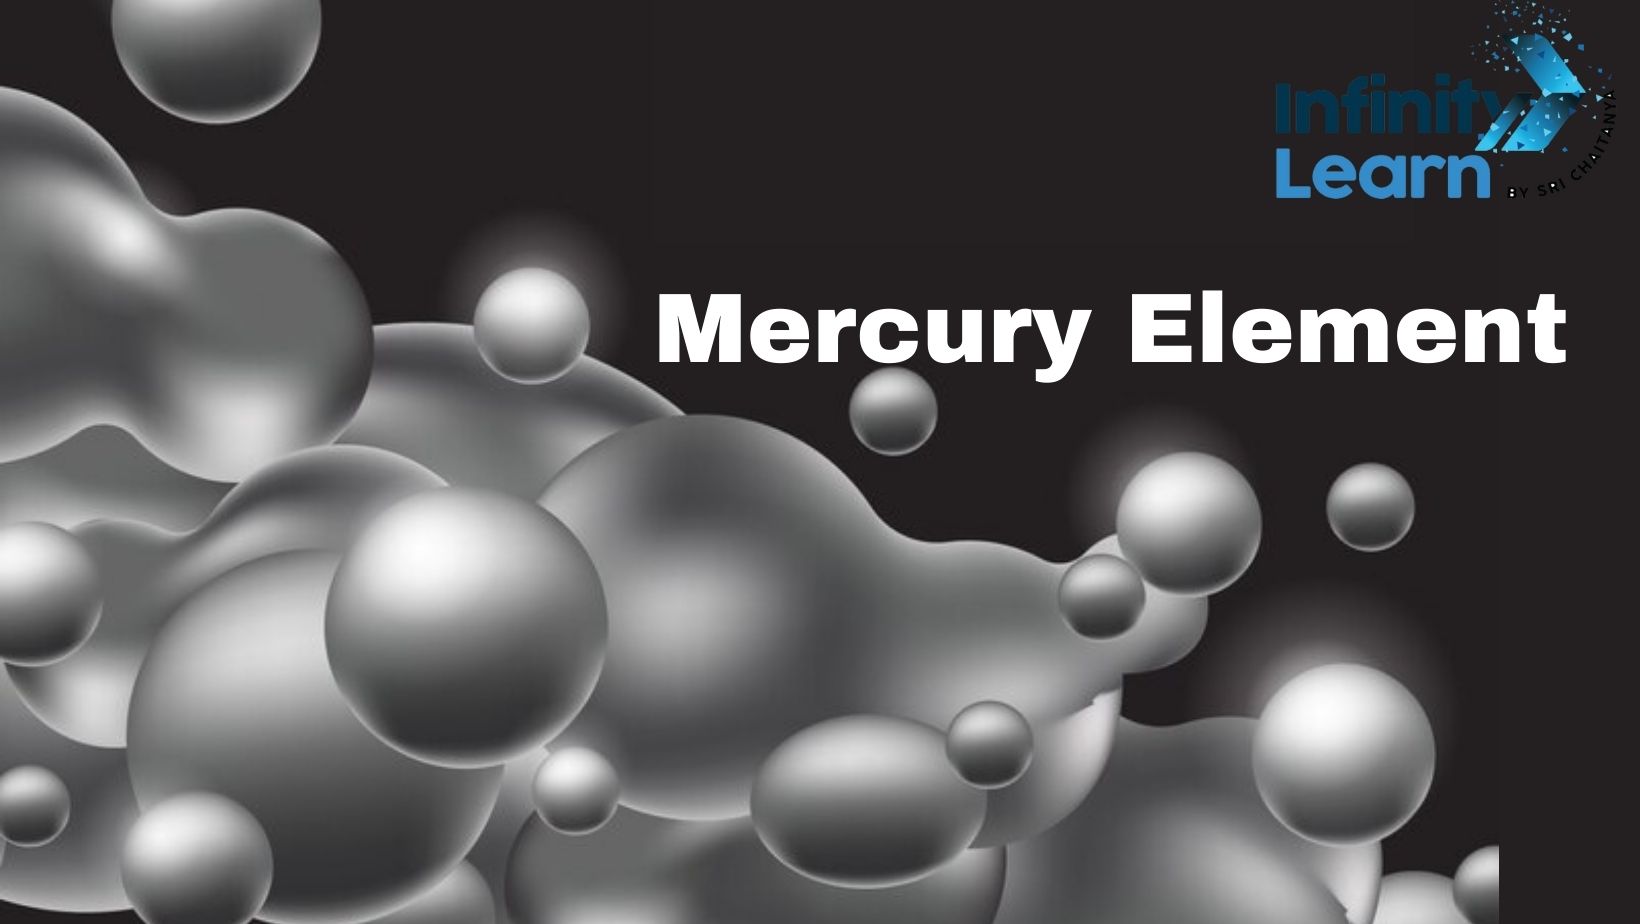 Mercury Element (Hg) 